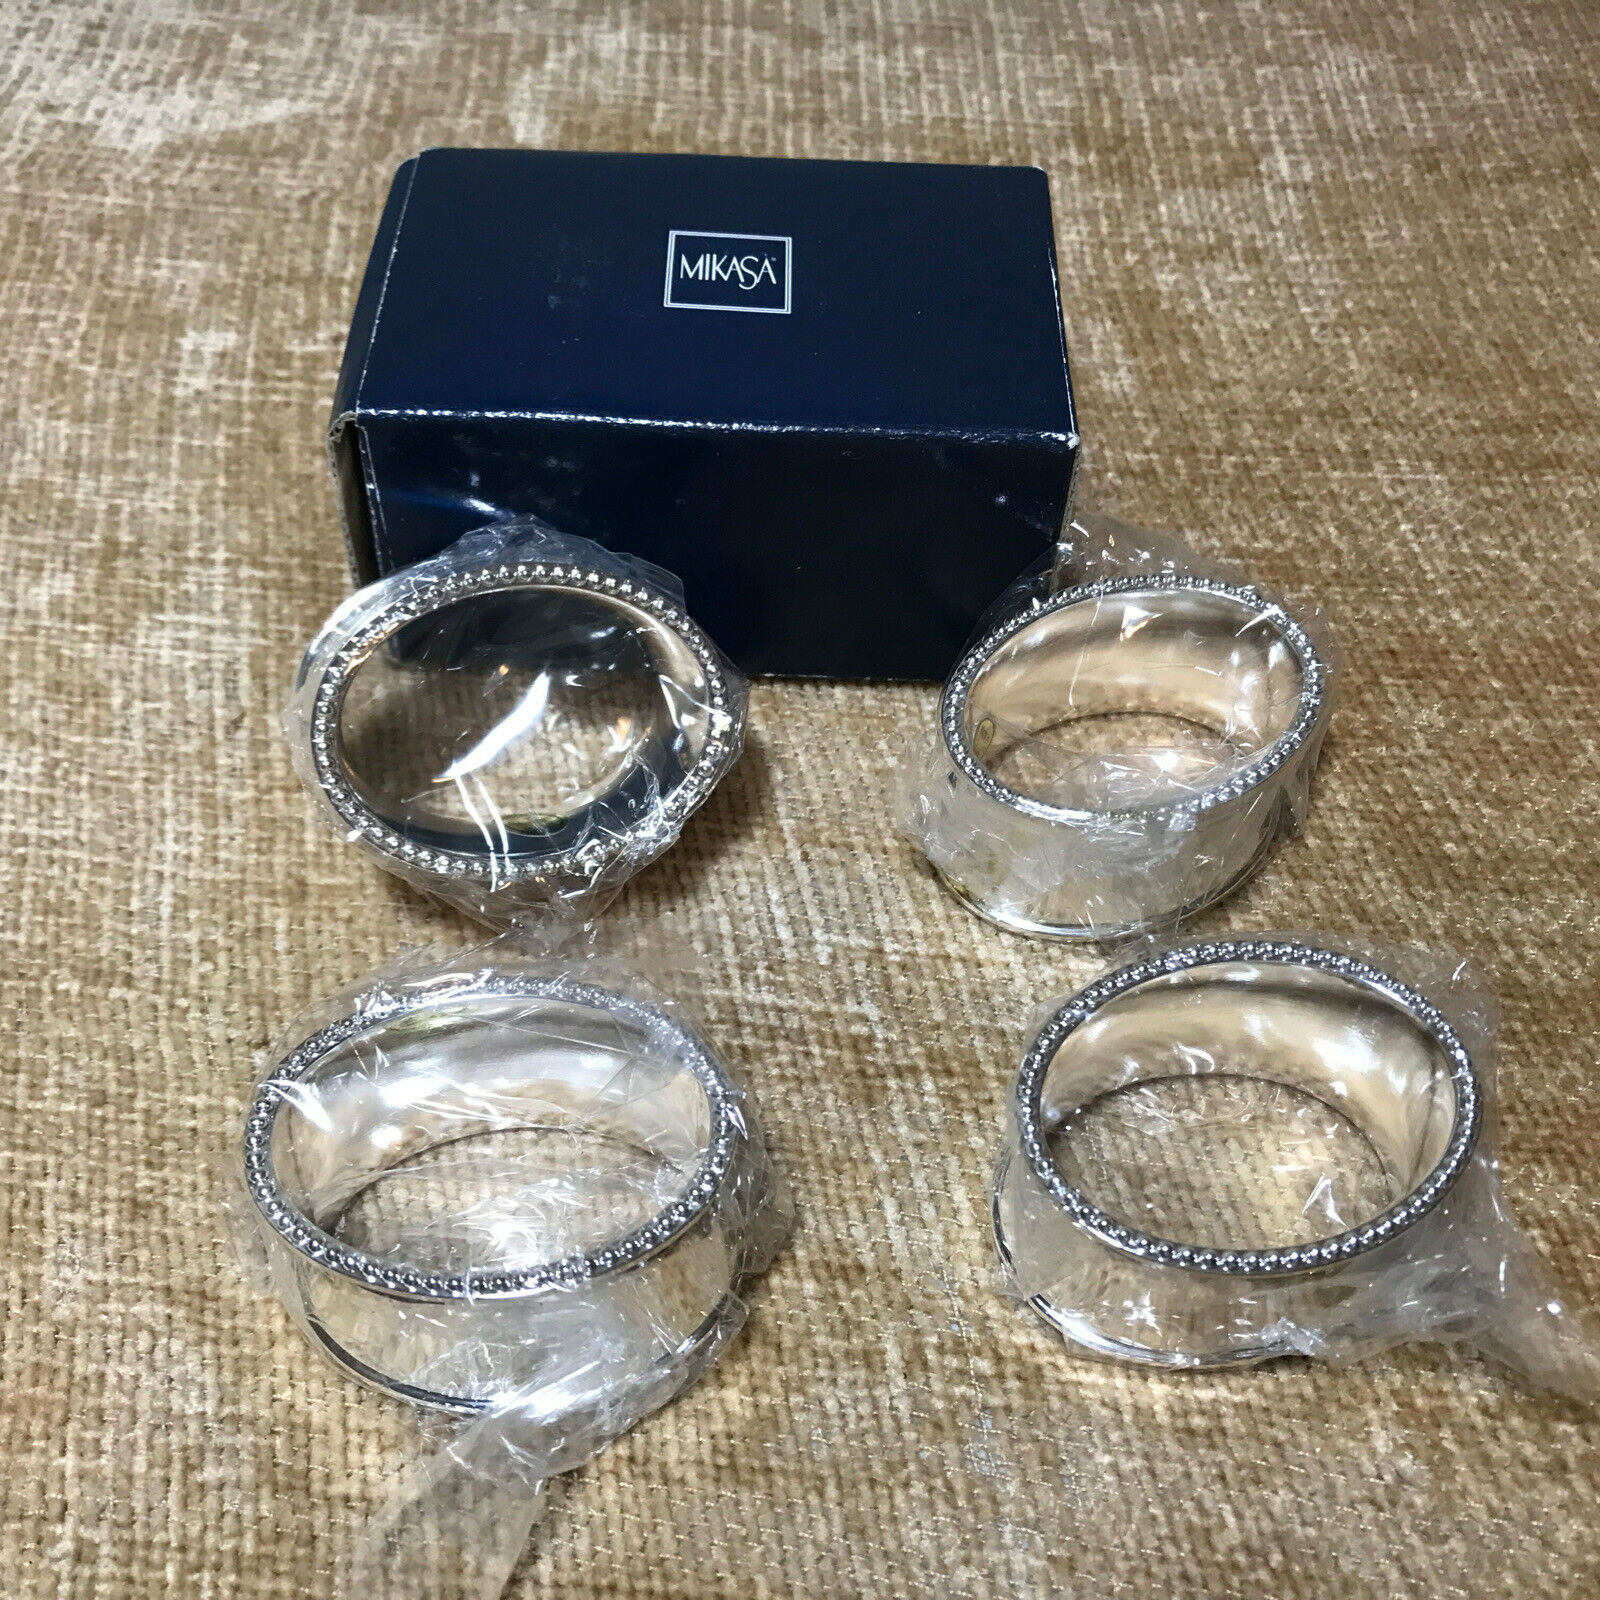 Mikasa Silver Beads Classic Napkin Rings - Set Of 4 New Sealed W/ Box Bko24/466